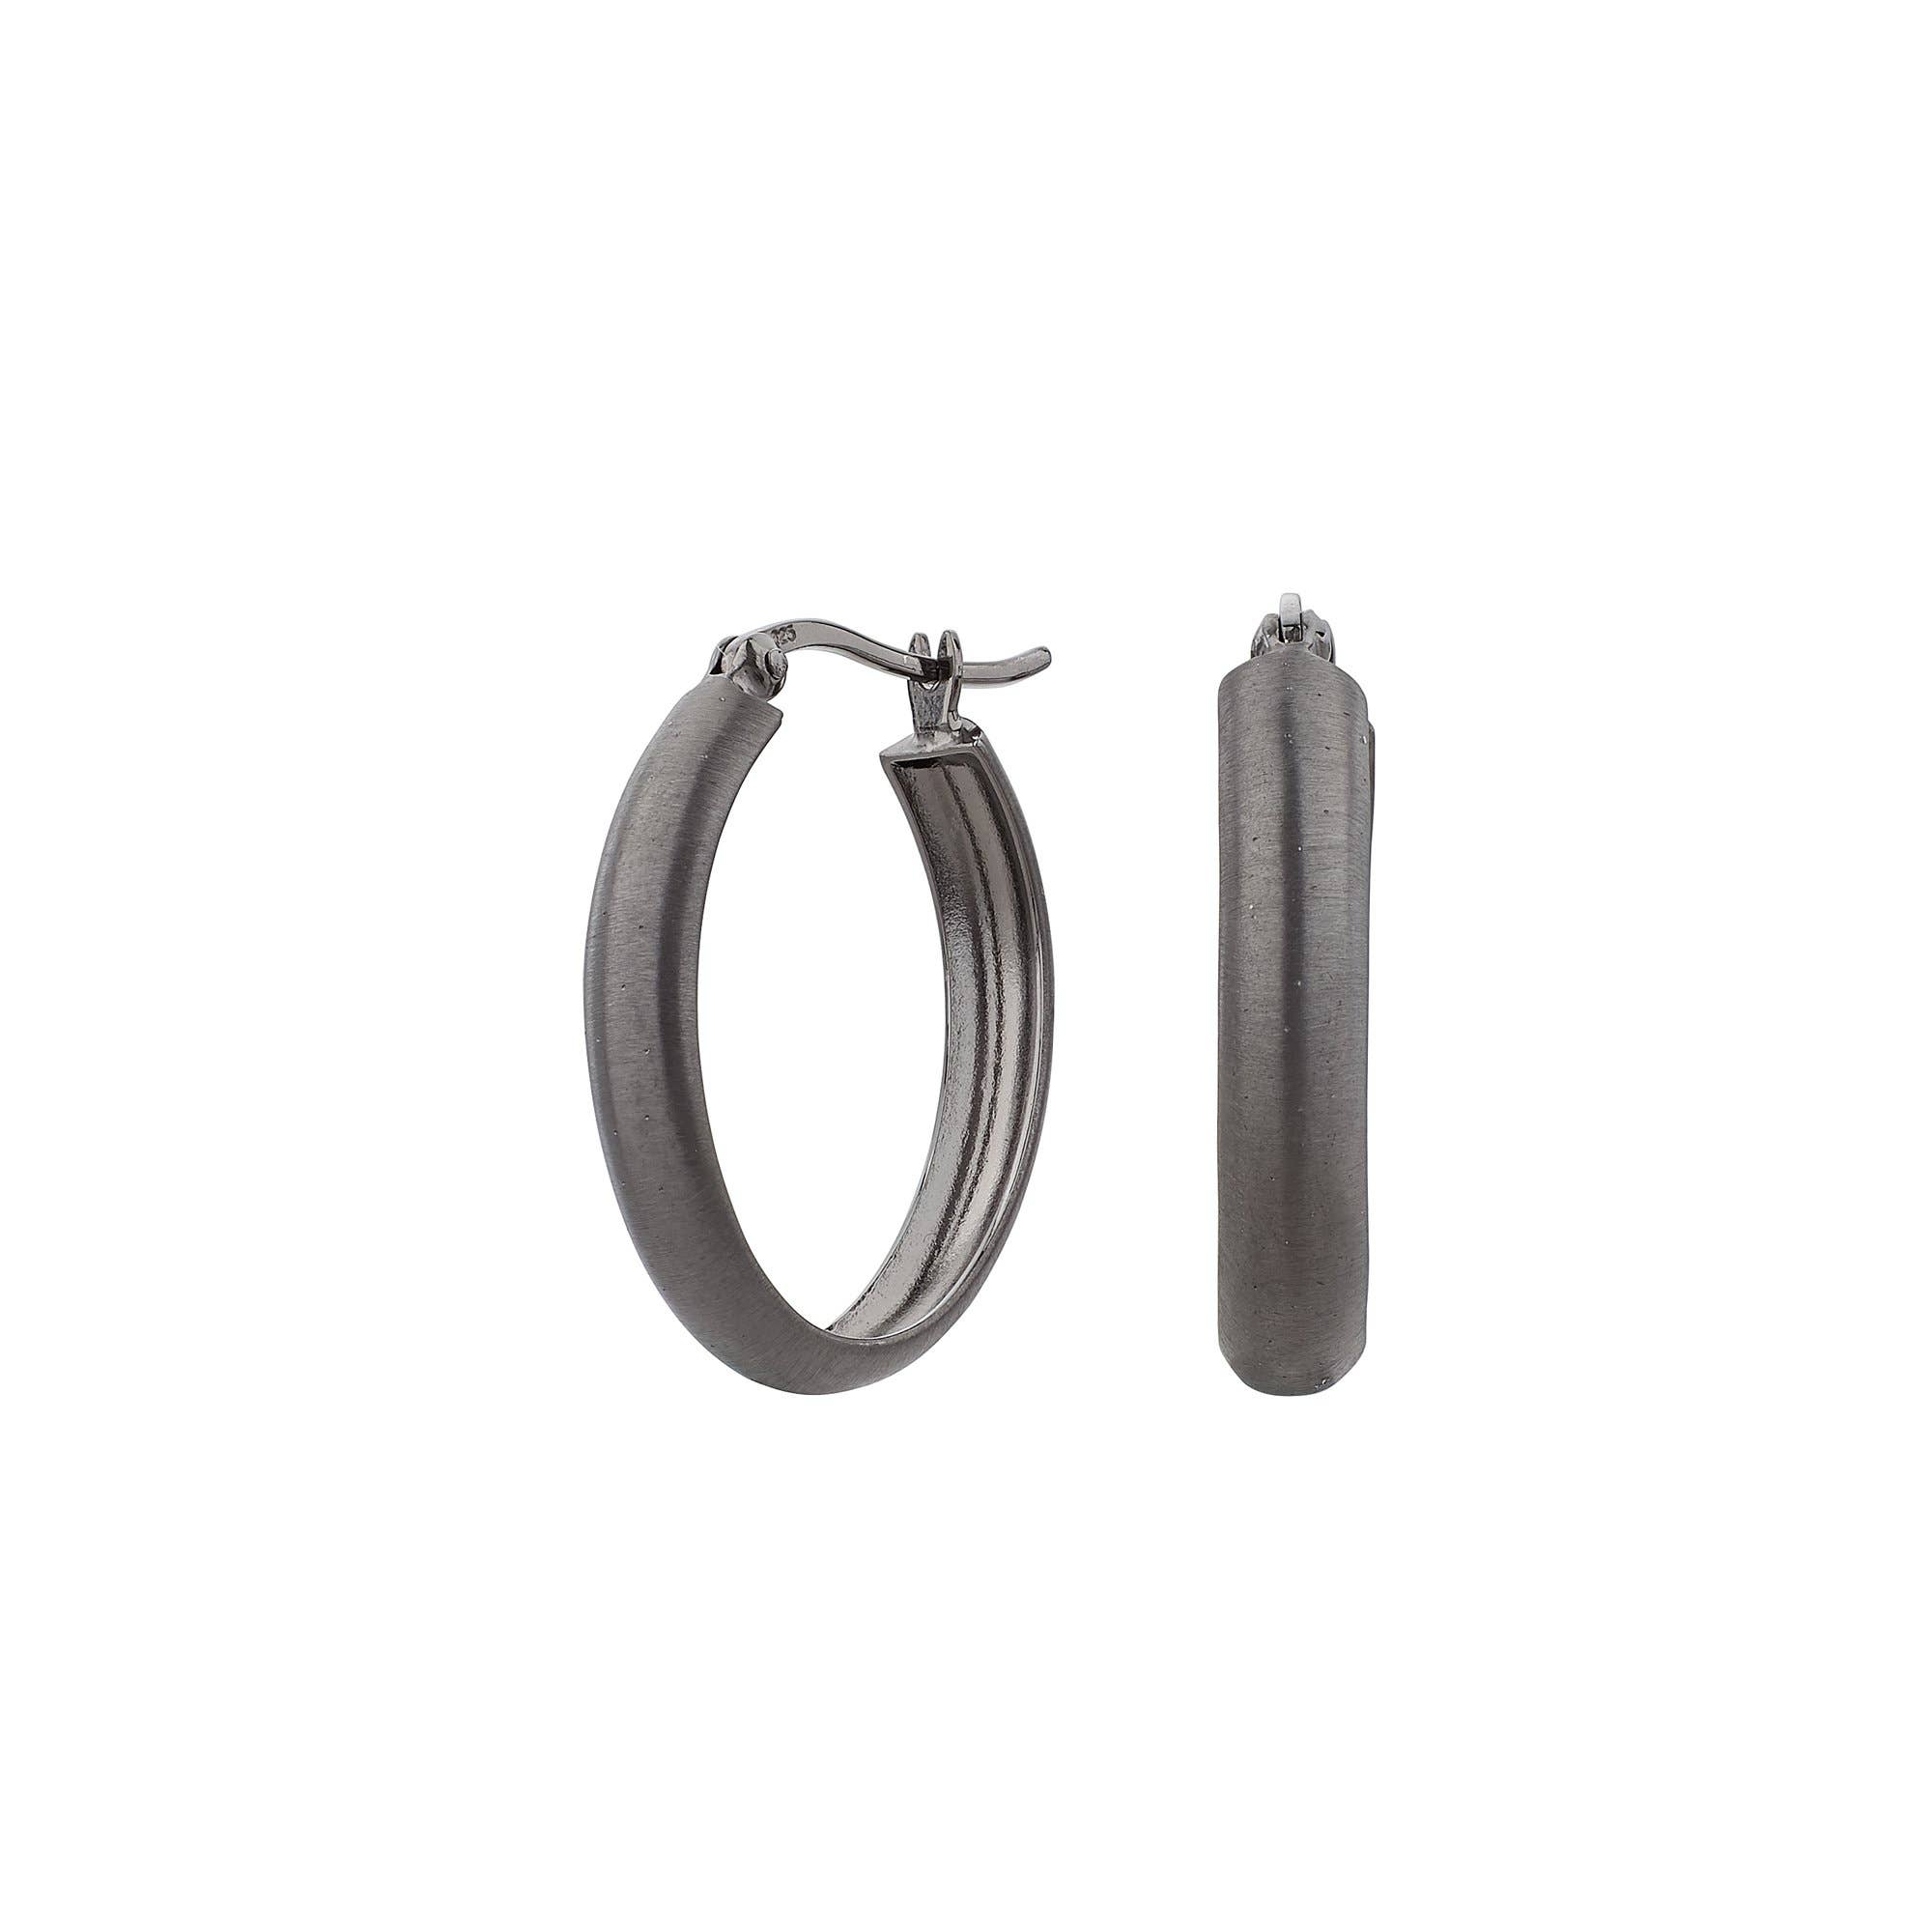 STERLING SILVER HANDCRAFTED 20mm.HEPTAGON  HOOP STYLE EARRINGS  £14.95  NWT